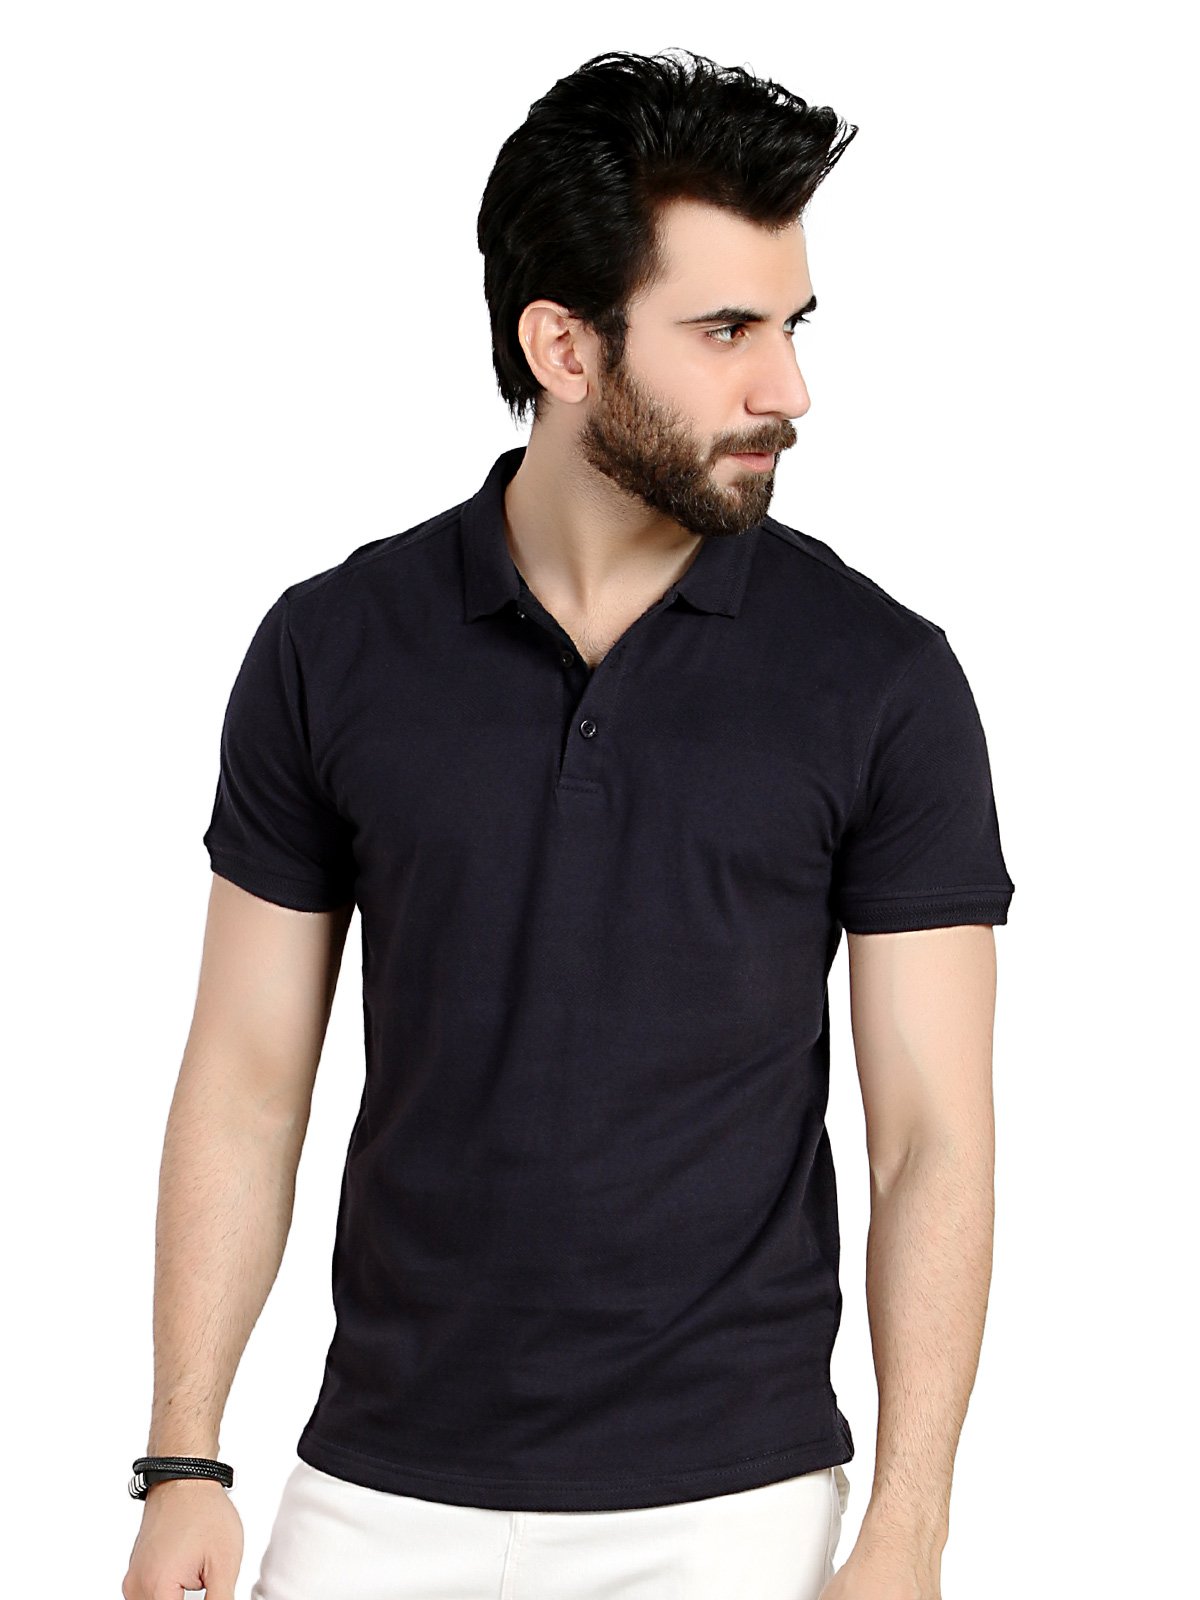 Men's Dark Navy Polo Shirt - FMTCP19-025